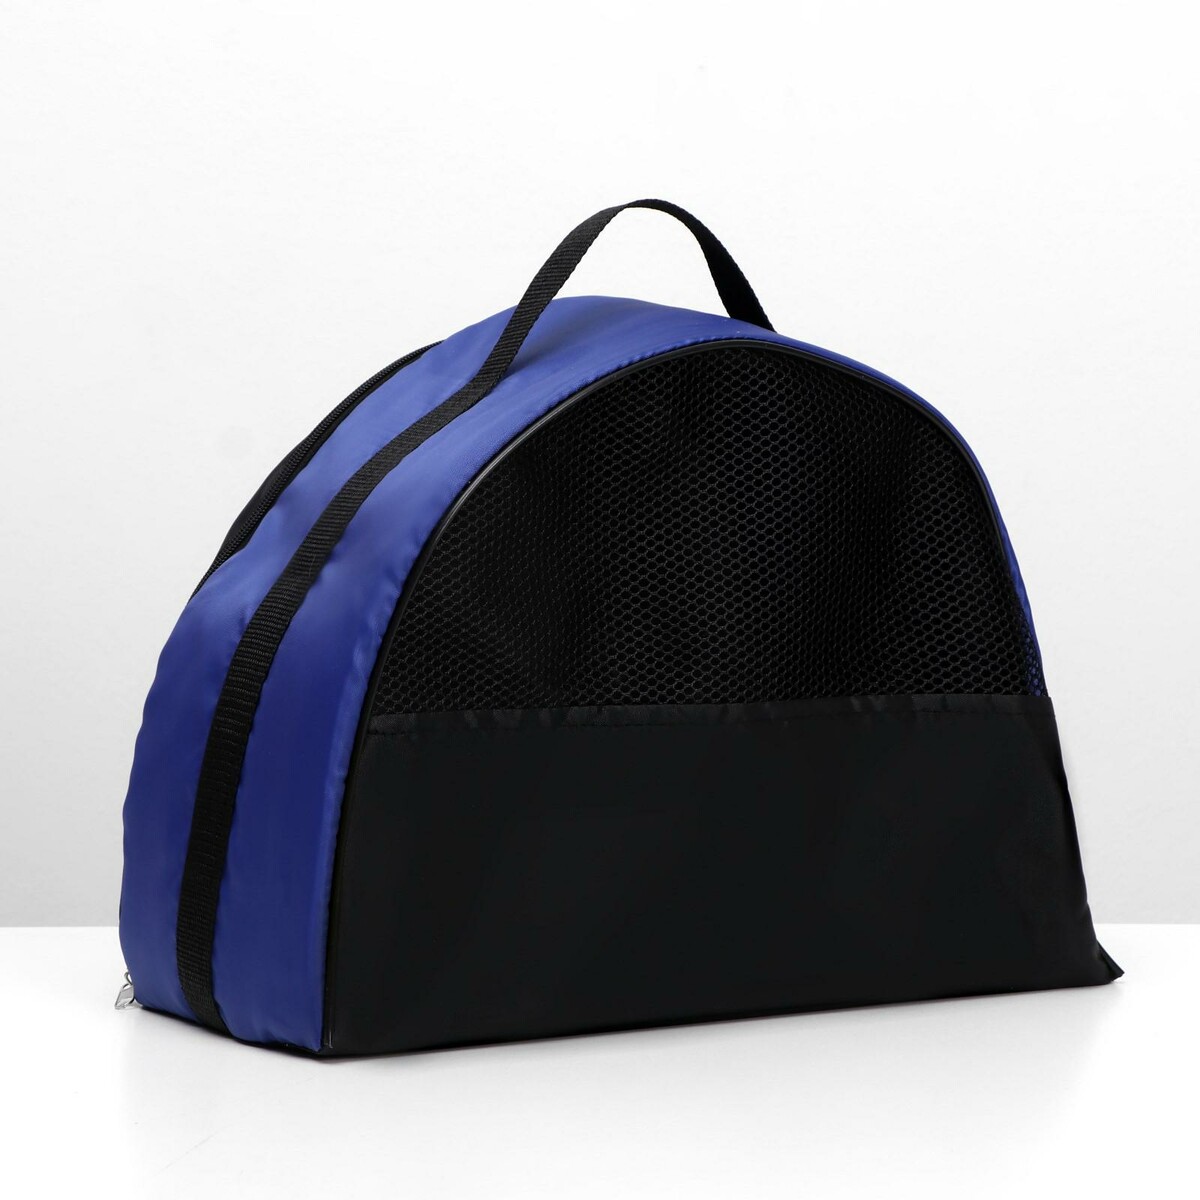 Сумка - переноска для животных, оксфорд, 39 х 19 х 27 см, синяя сумка переноска для животных каркасная 40 х 25 х 25 см синяя с котом